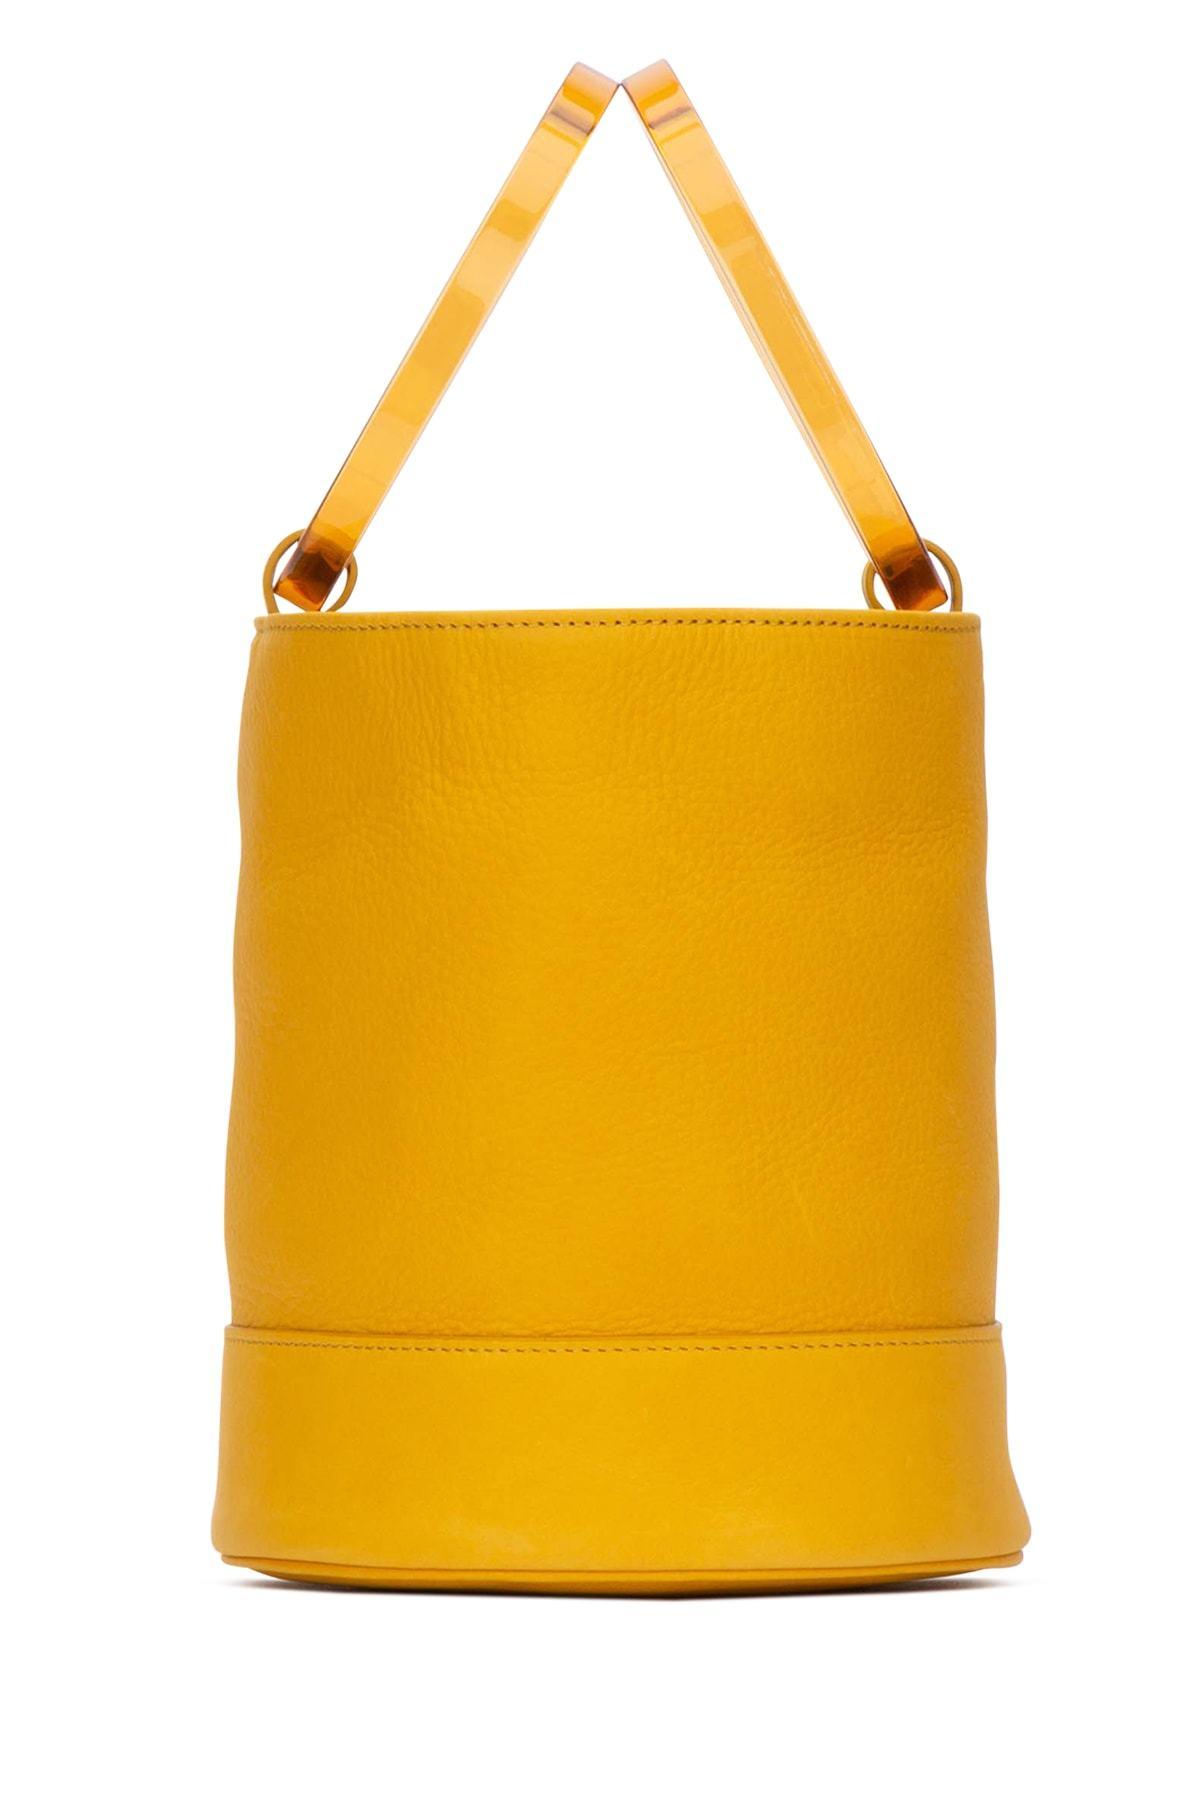 Simon Miller Leather Medium Bonsai Bucket Bag in Yellow - Lyst